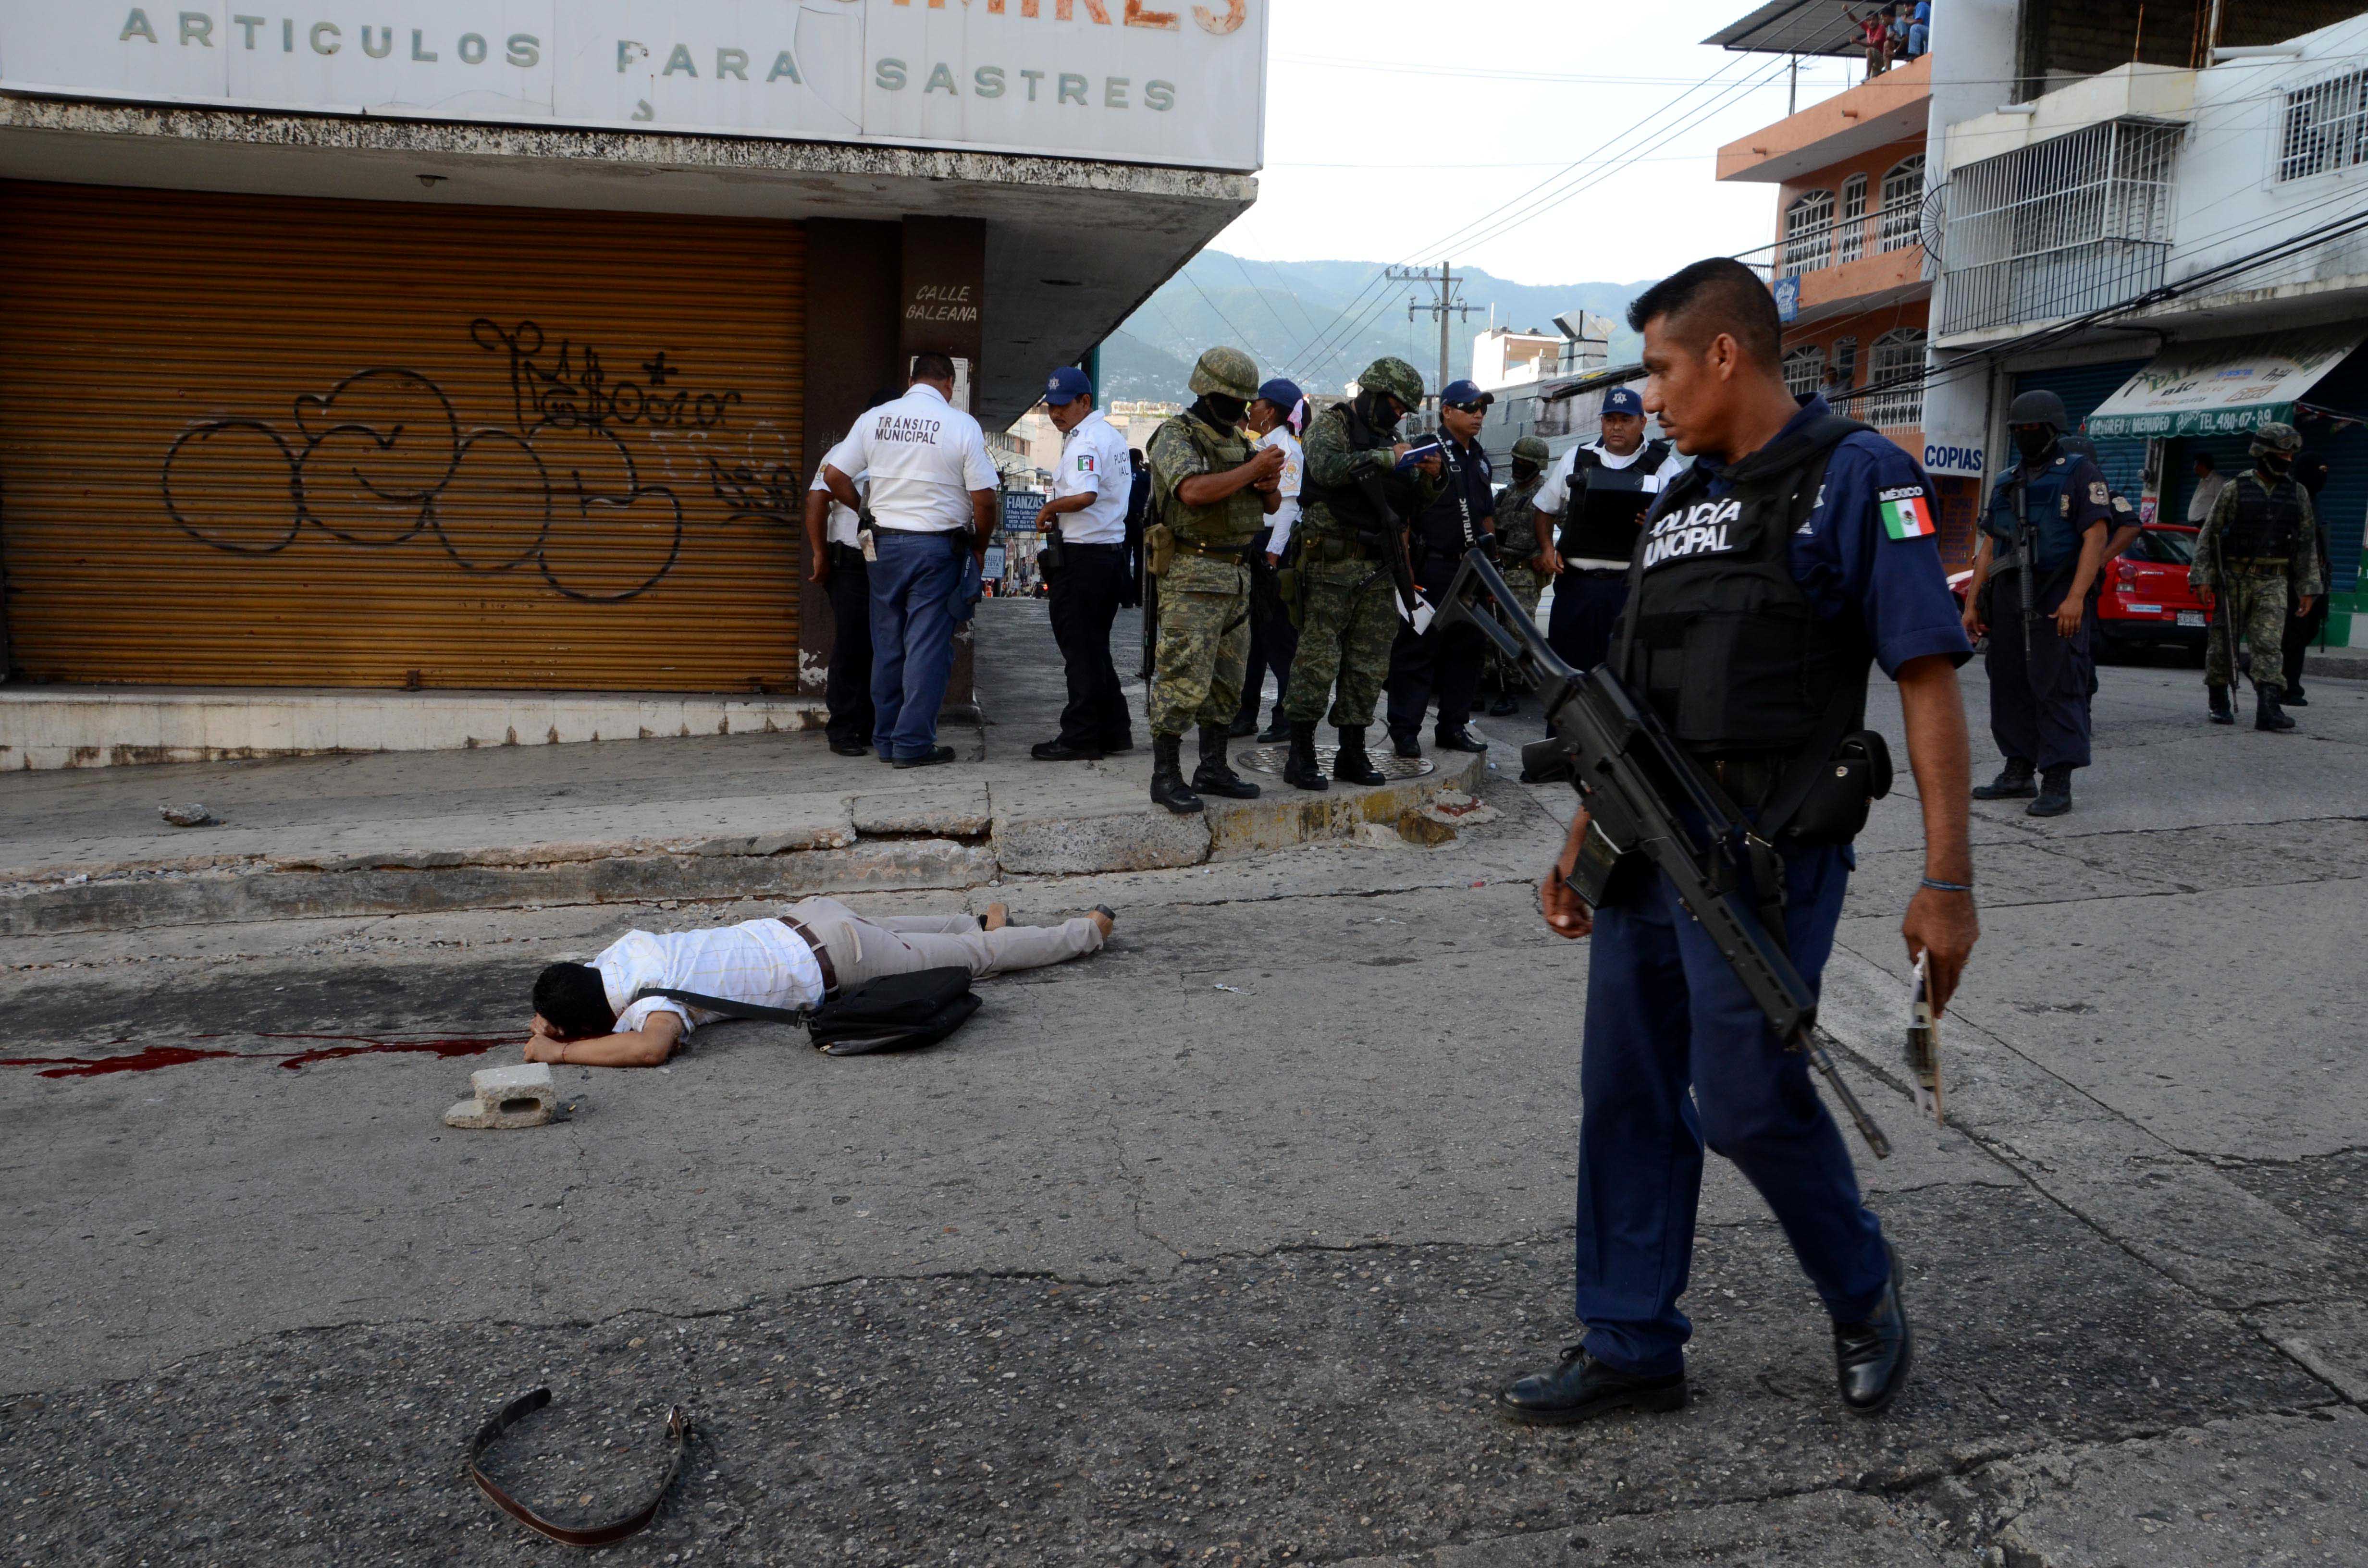  Acapulco vive en situación de emergencia: Alcalde